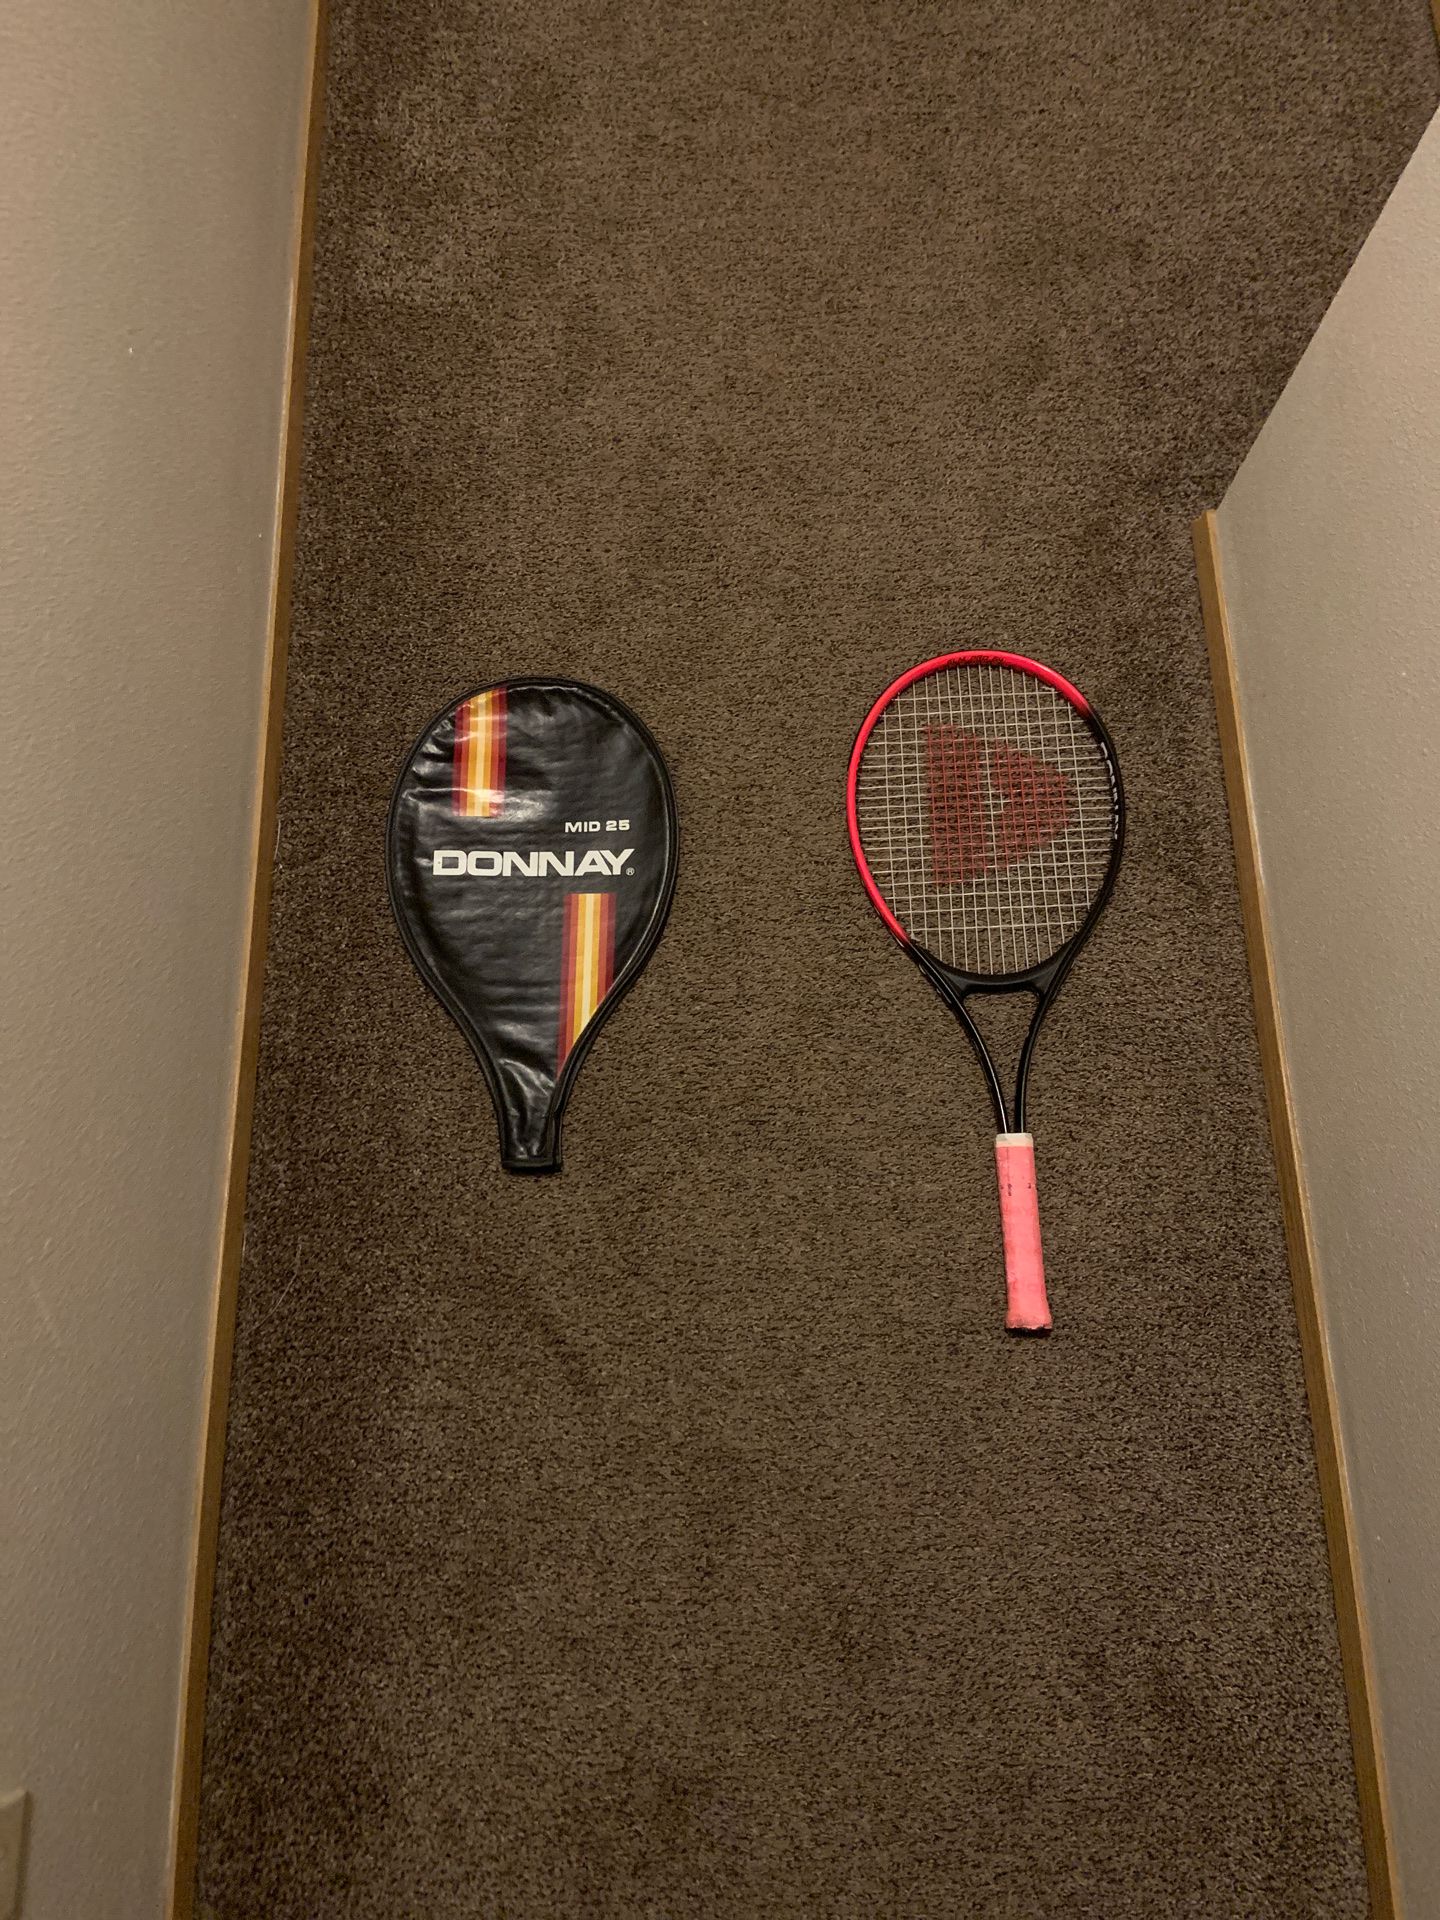 Donnay tennis racket